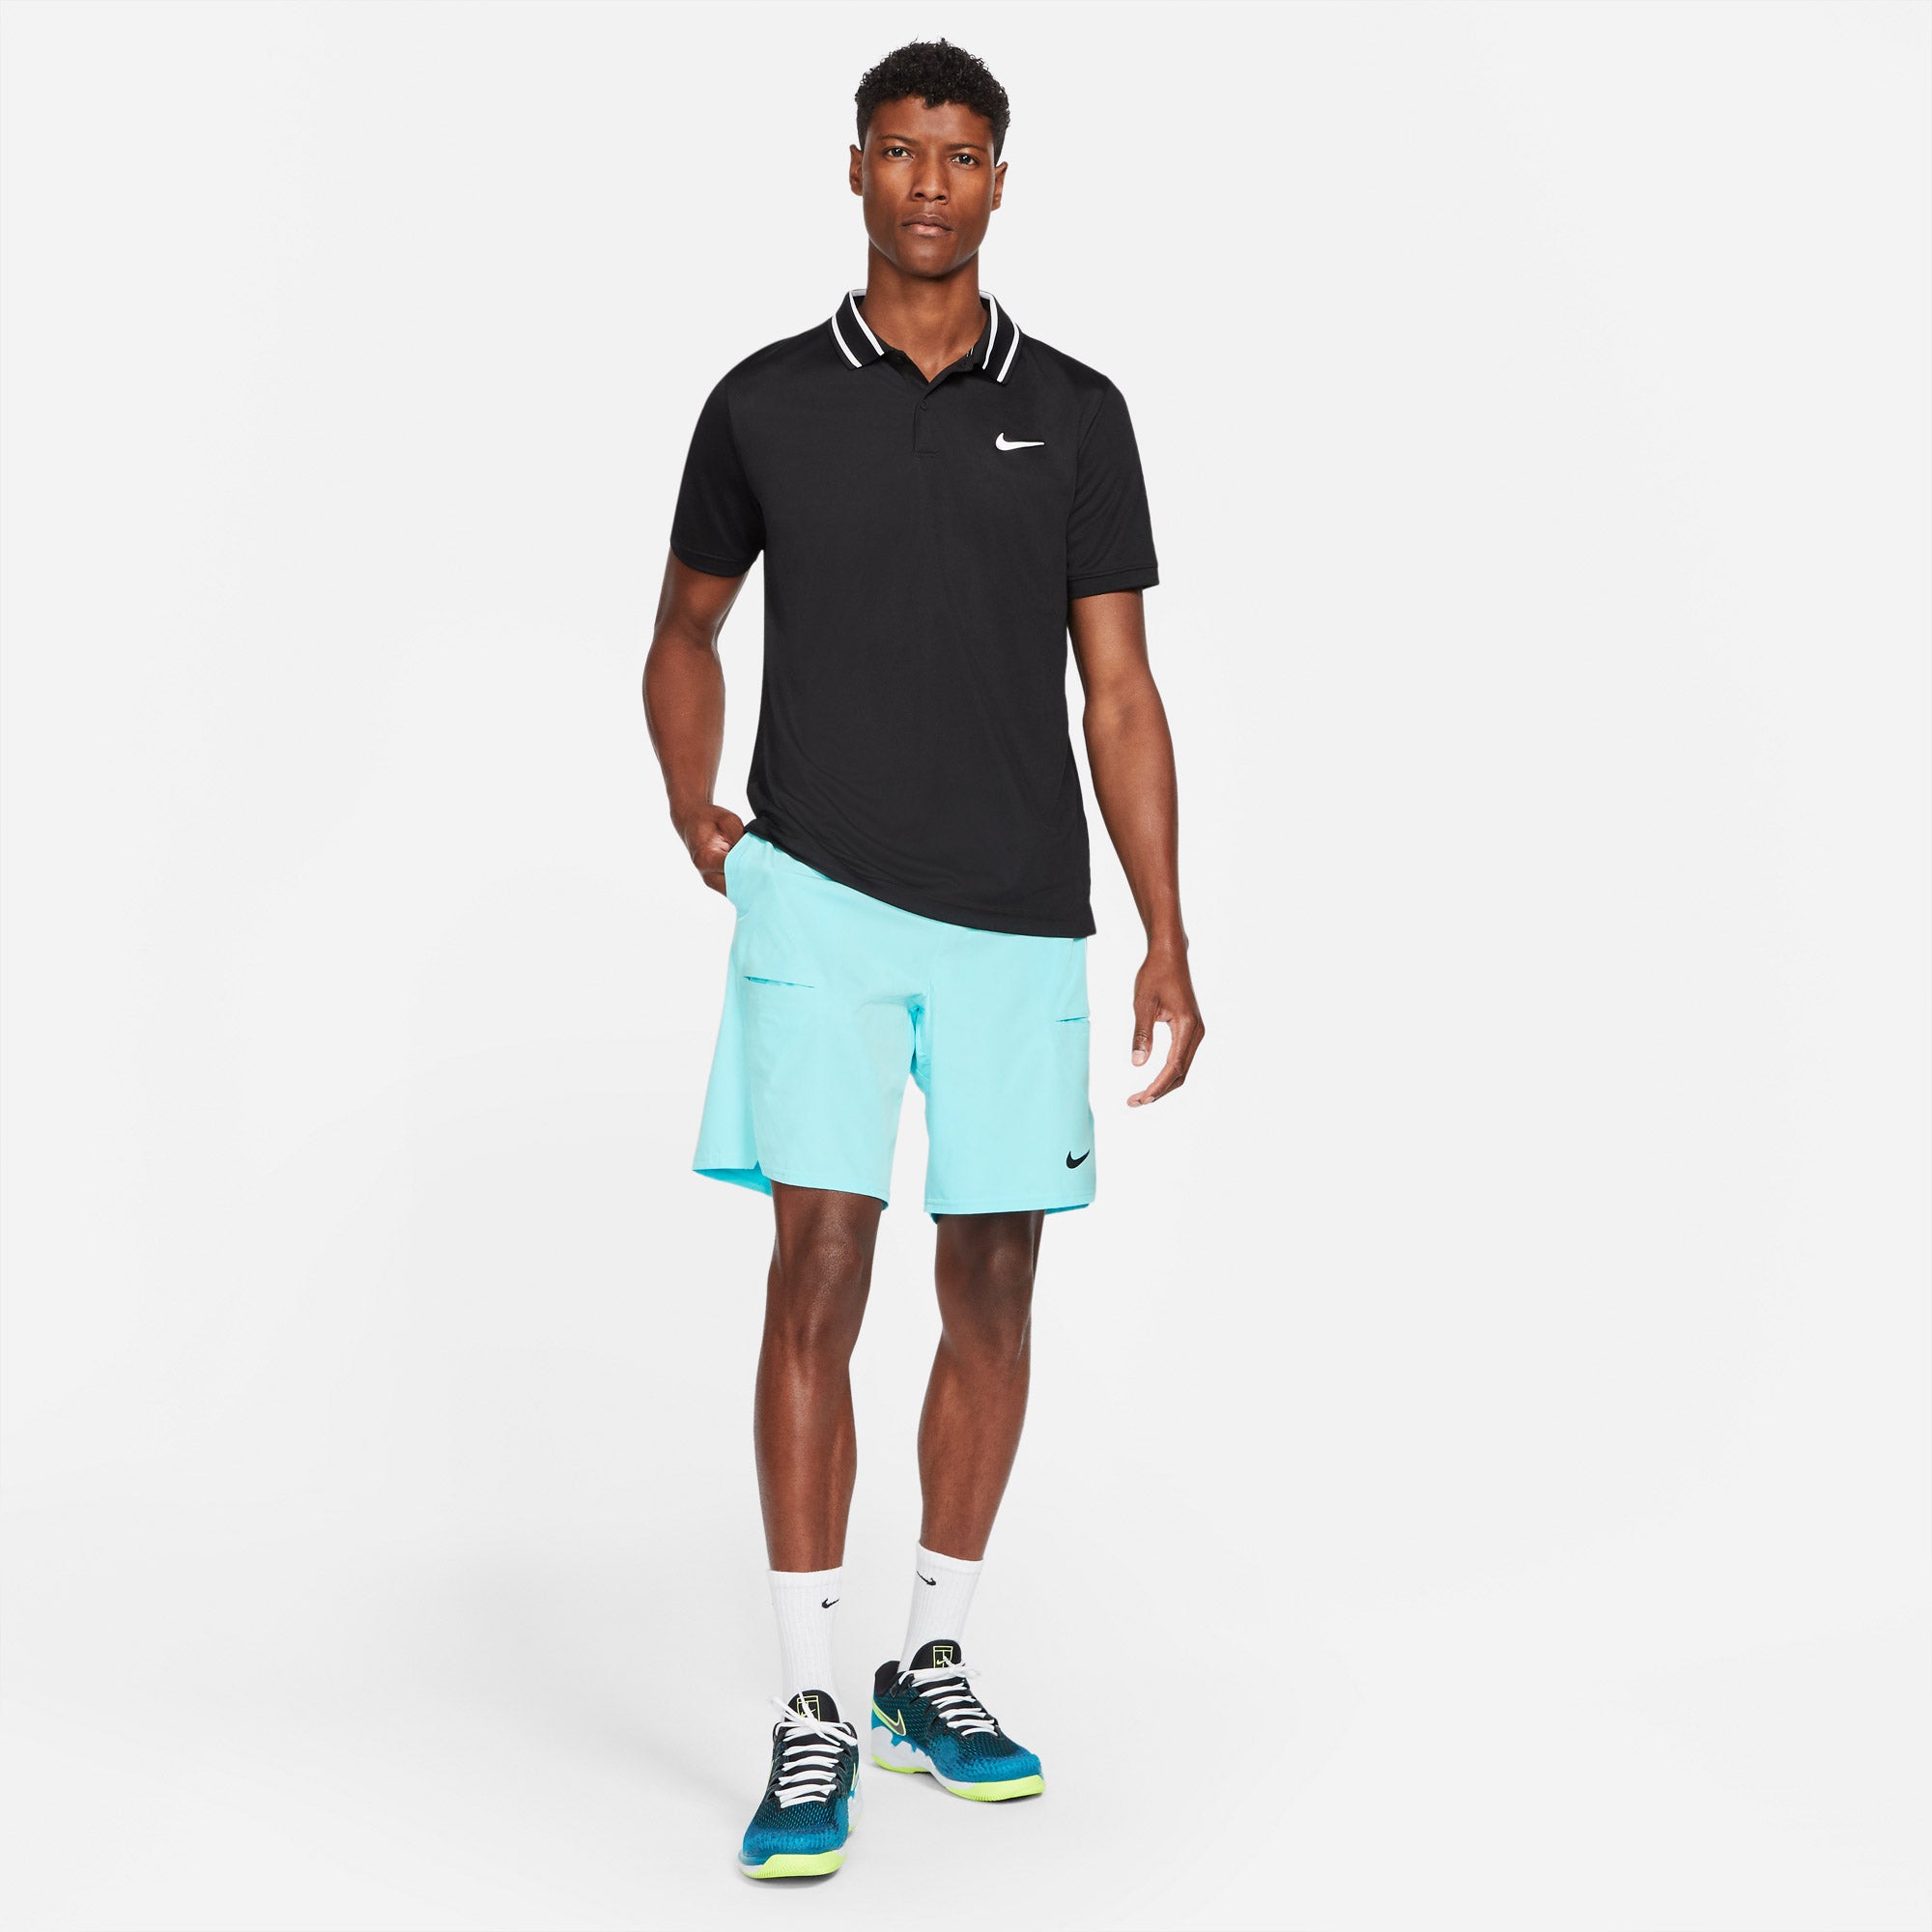 Nike Flex Advantage Men's 9-Inch Tennis Shorts Blue (3)